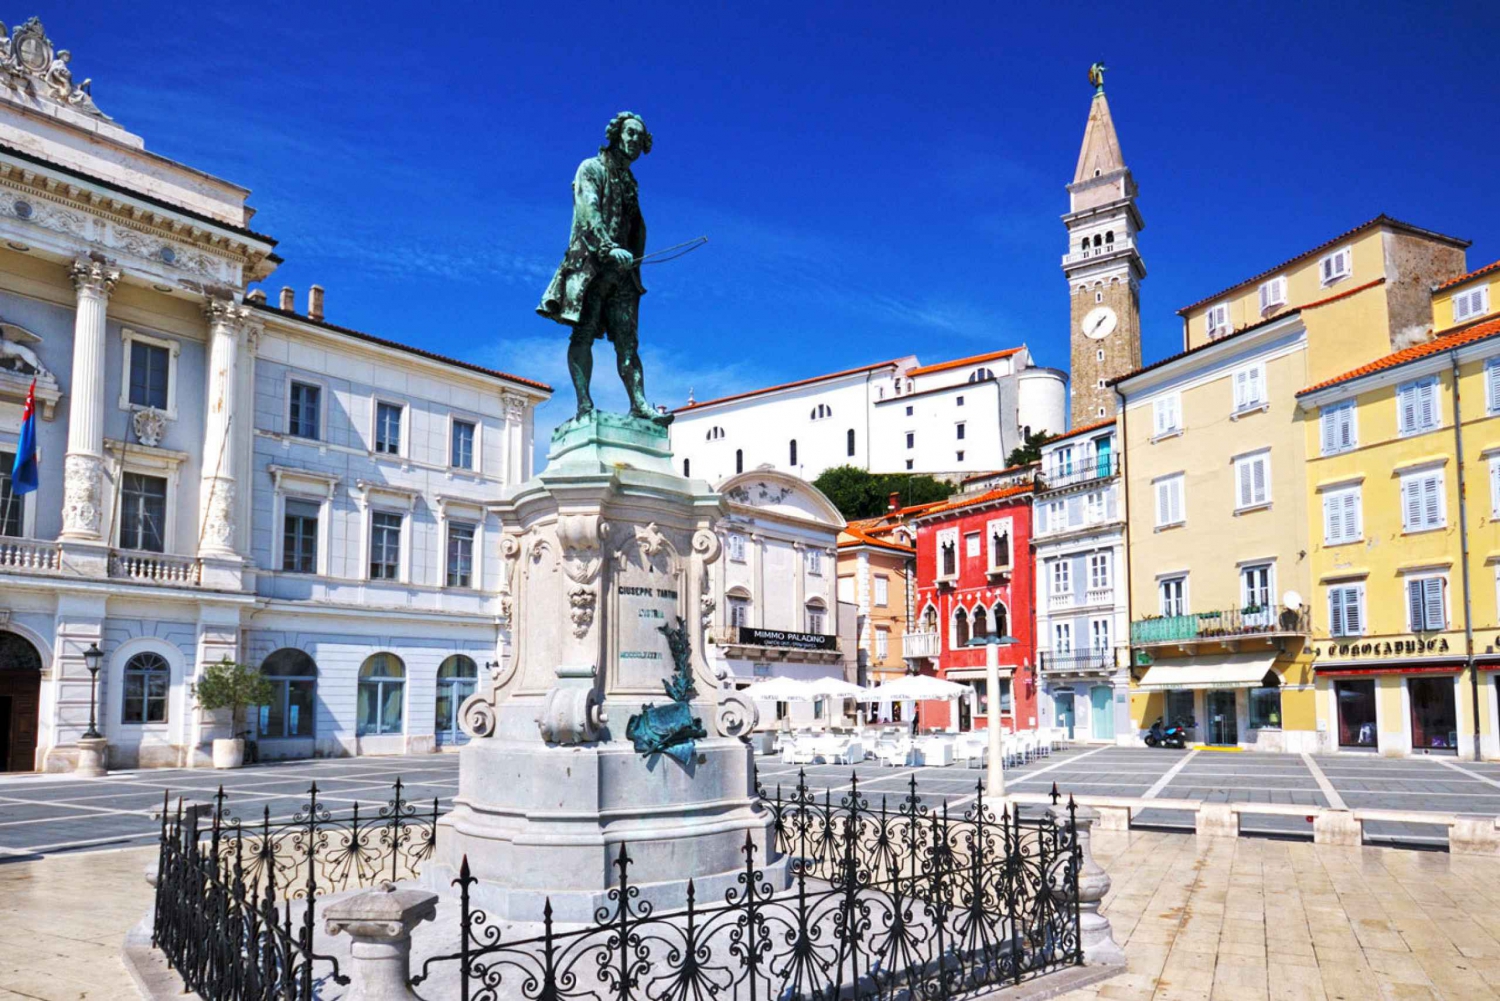 Piran and Slovenia Coast Tour from Trieste